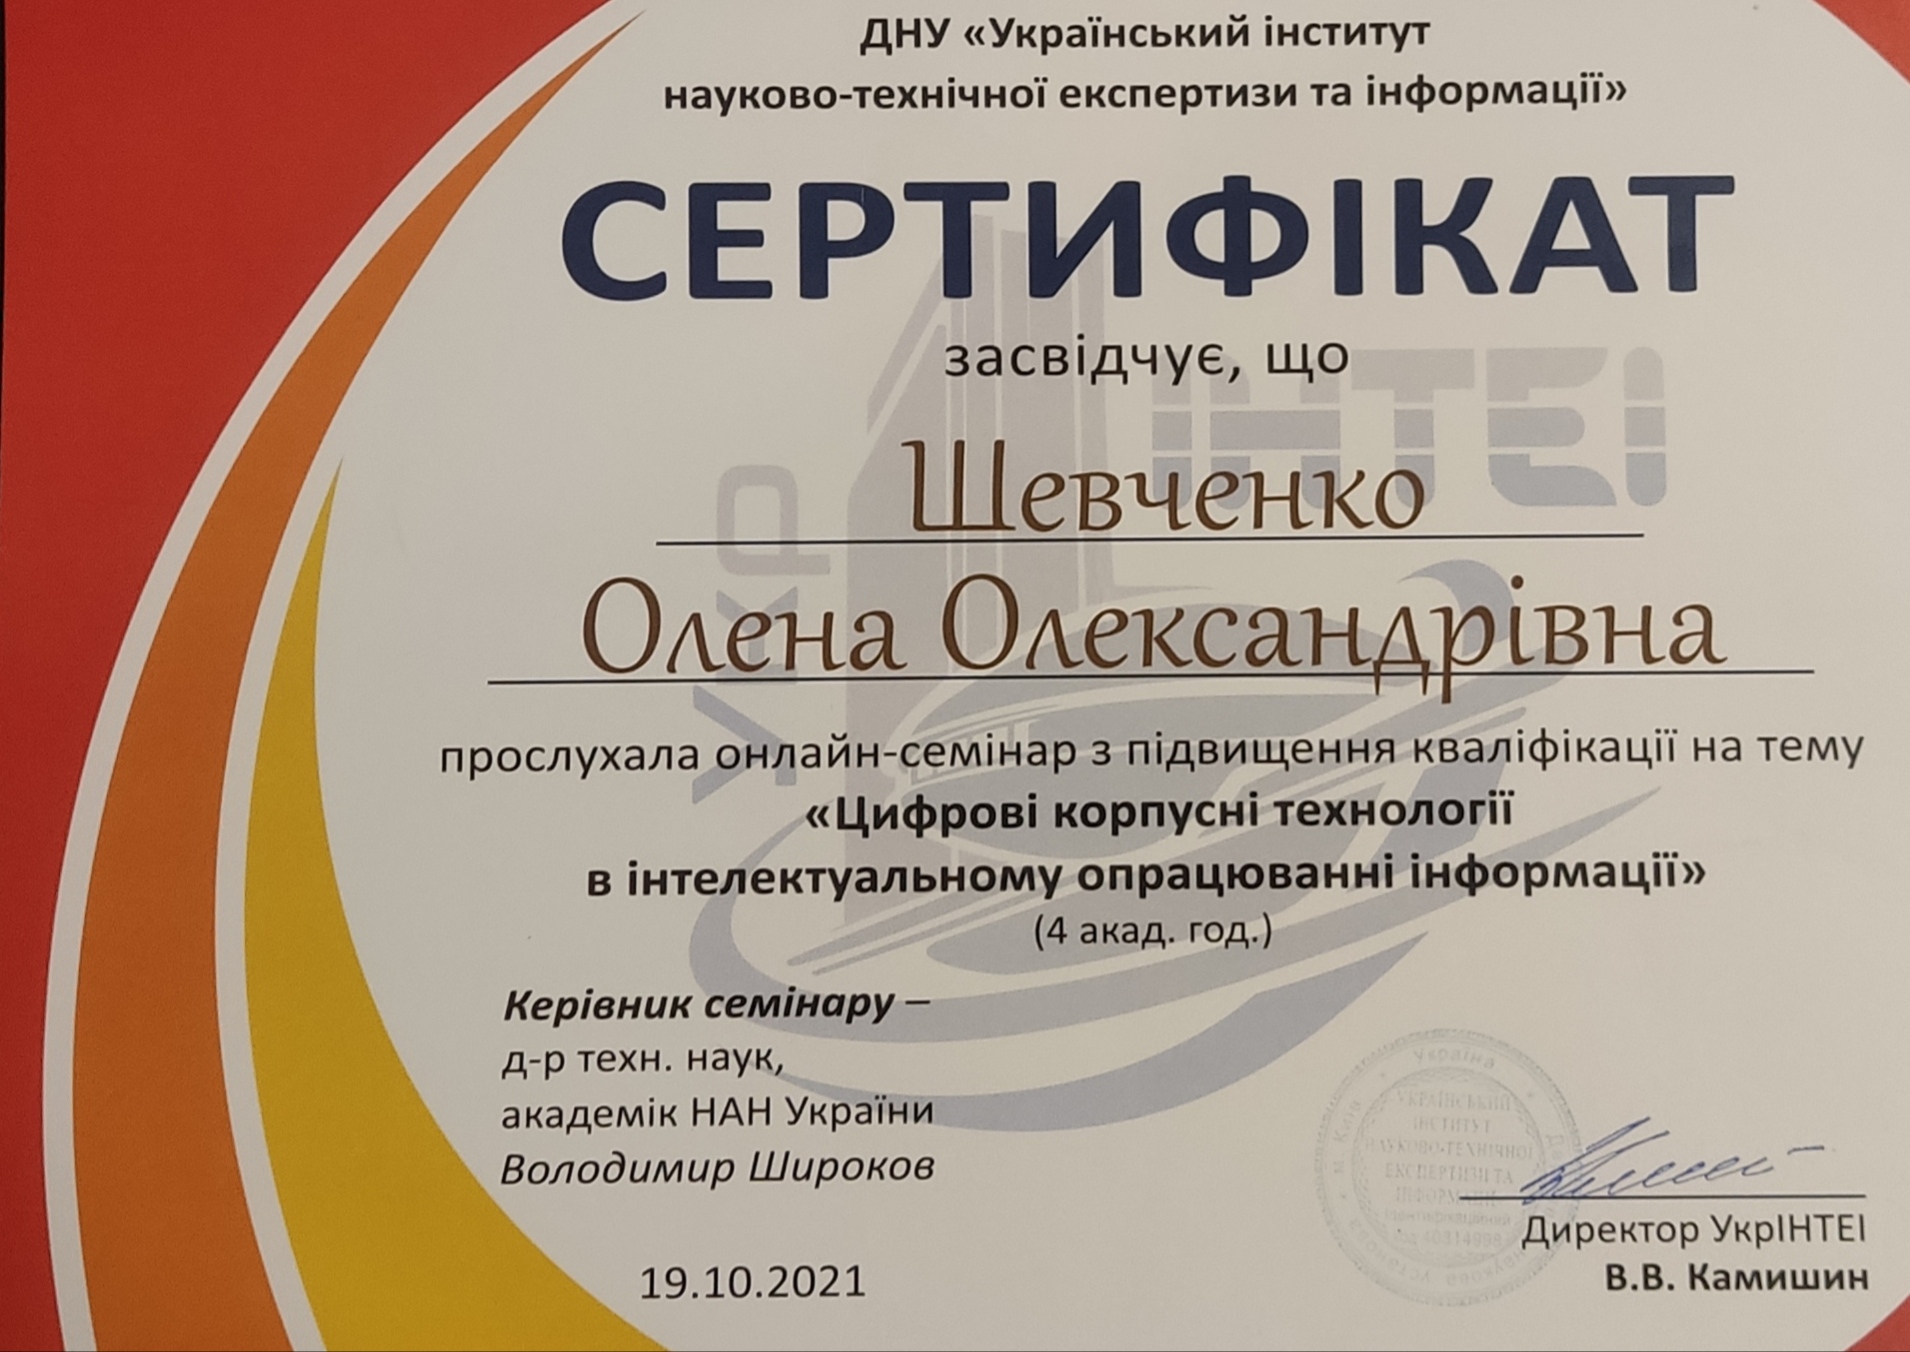 shevchenko_sertificat3.jpg